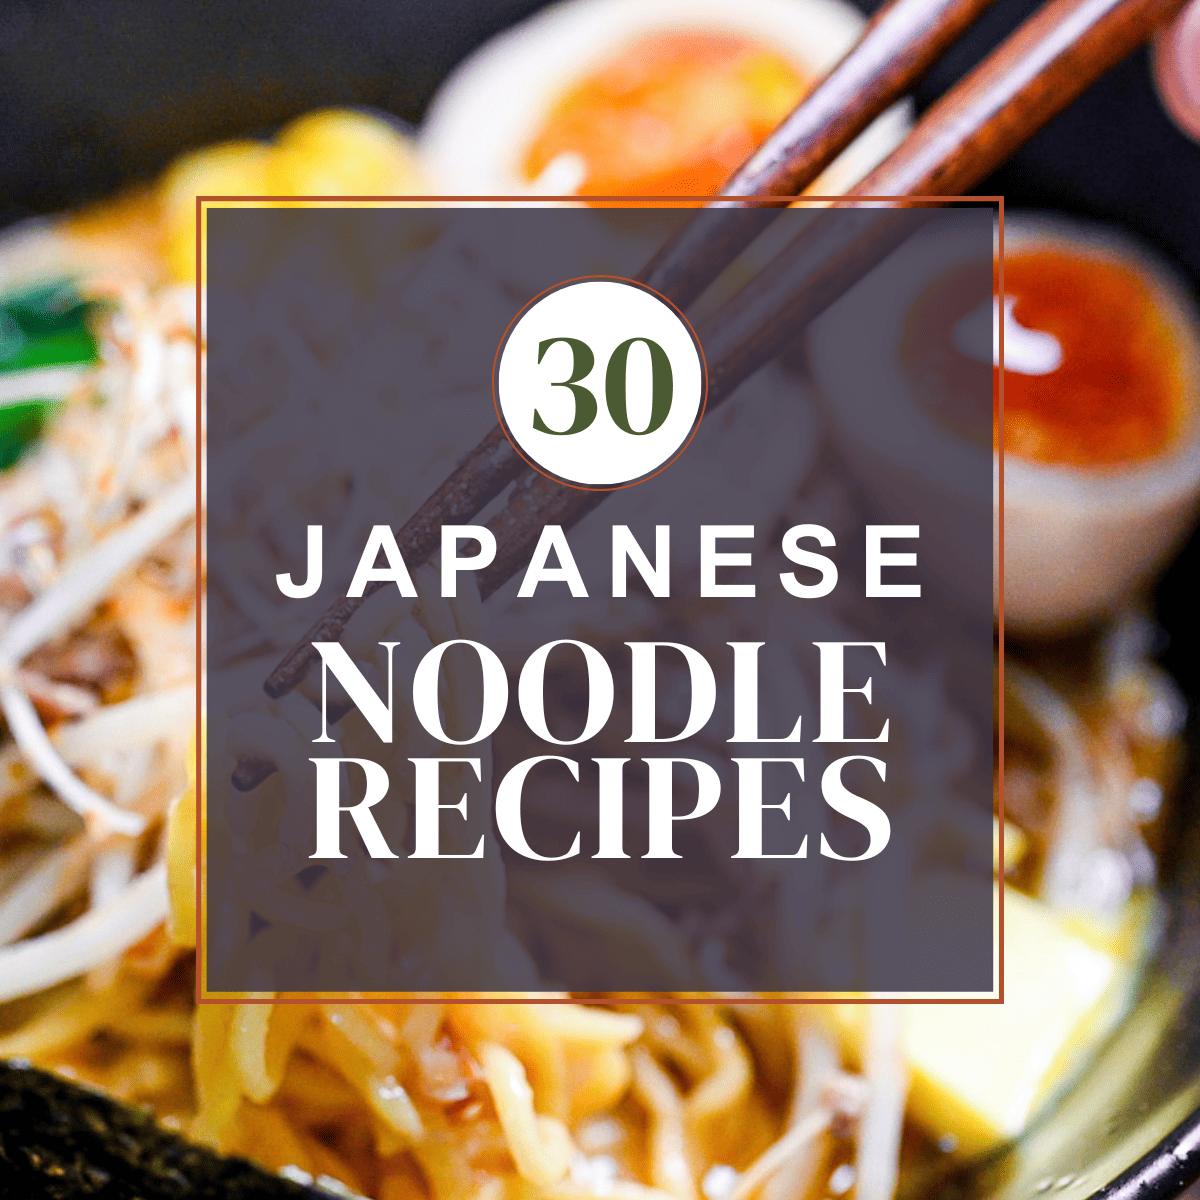 Japanese noodle recipes